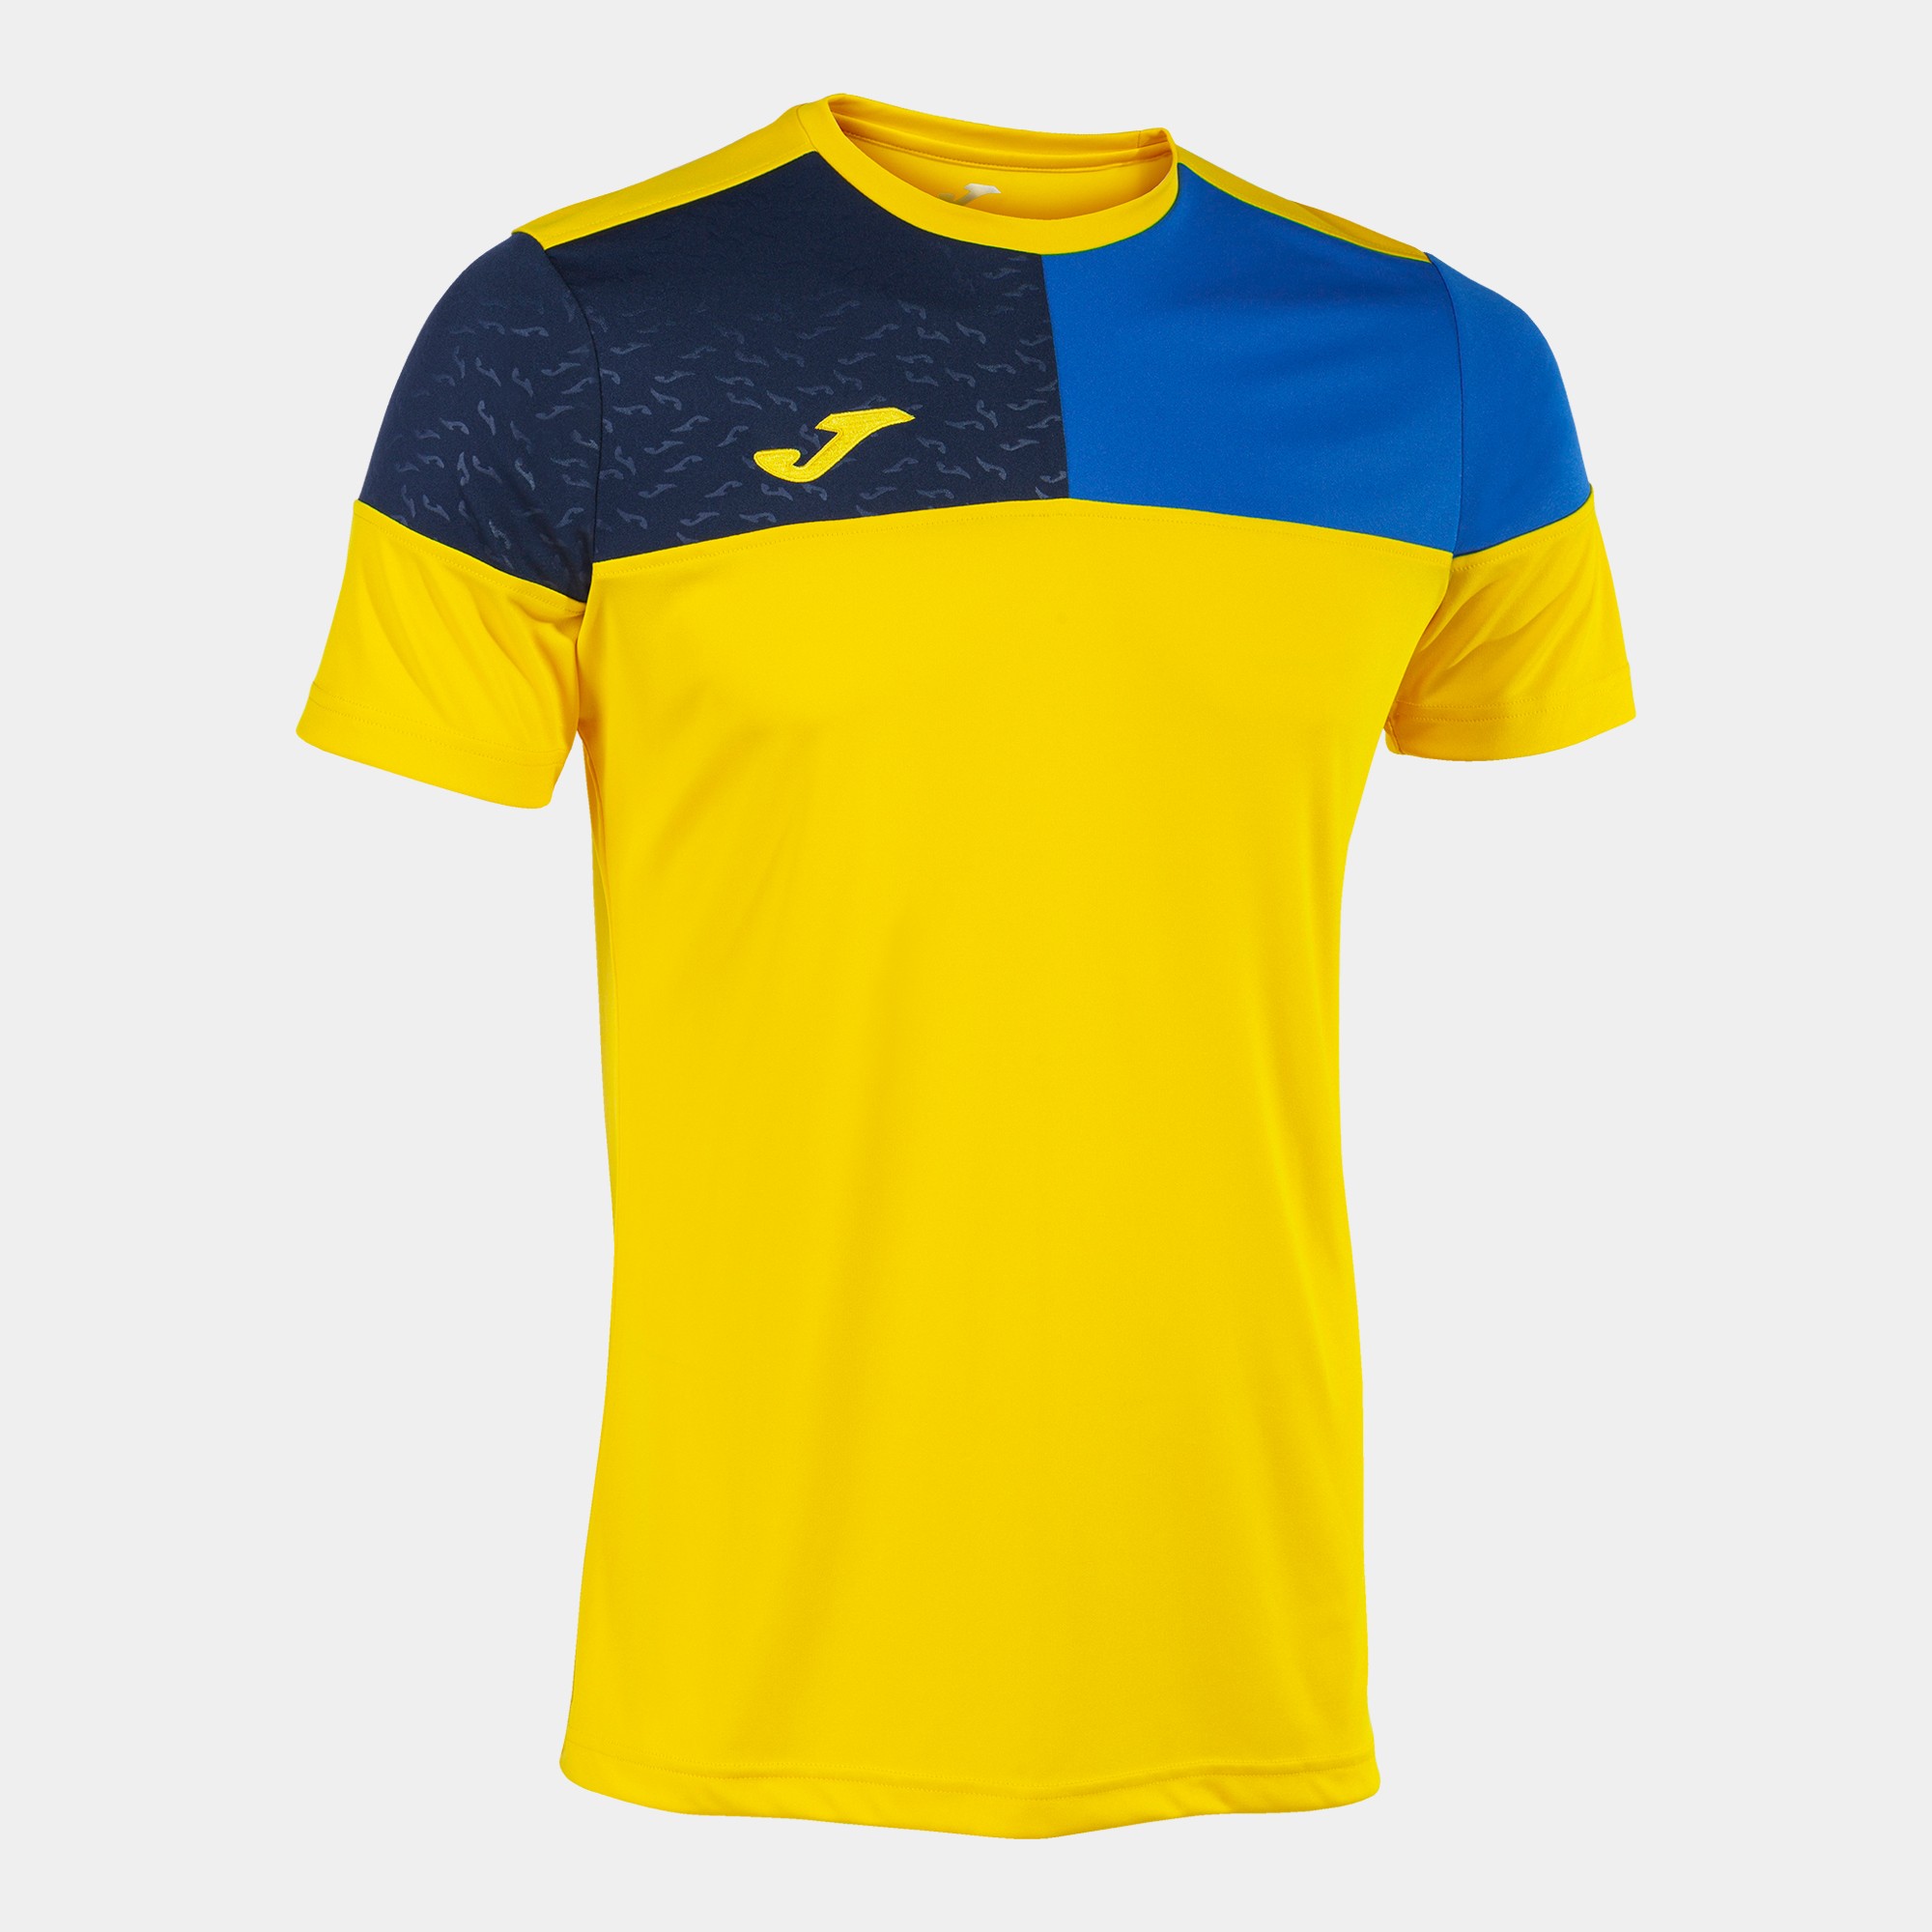 Camiseta Joma CREW V 901856.353 - Deportes Manzanedo